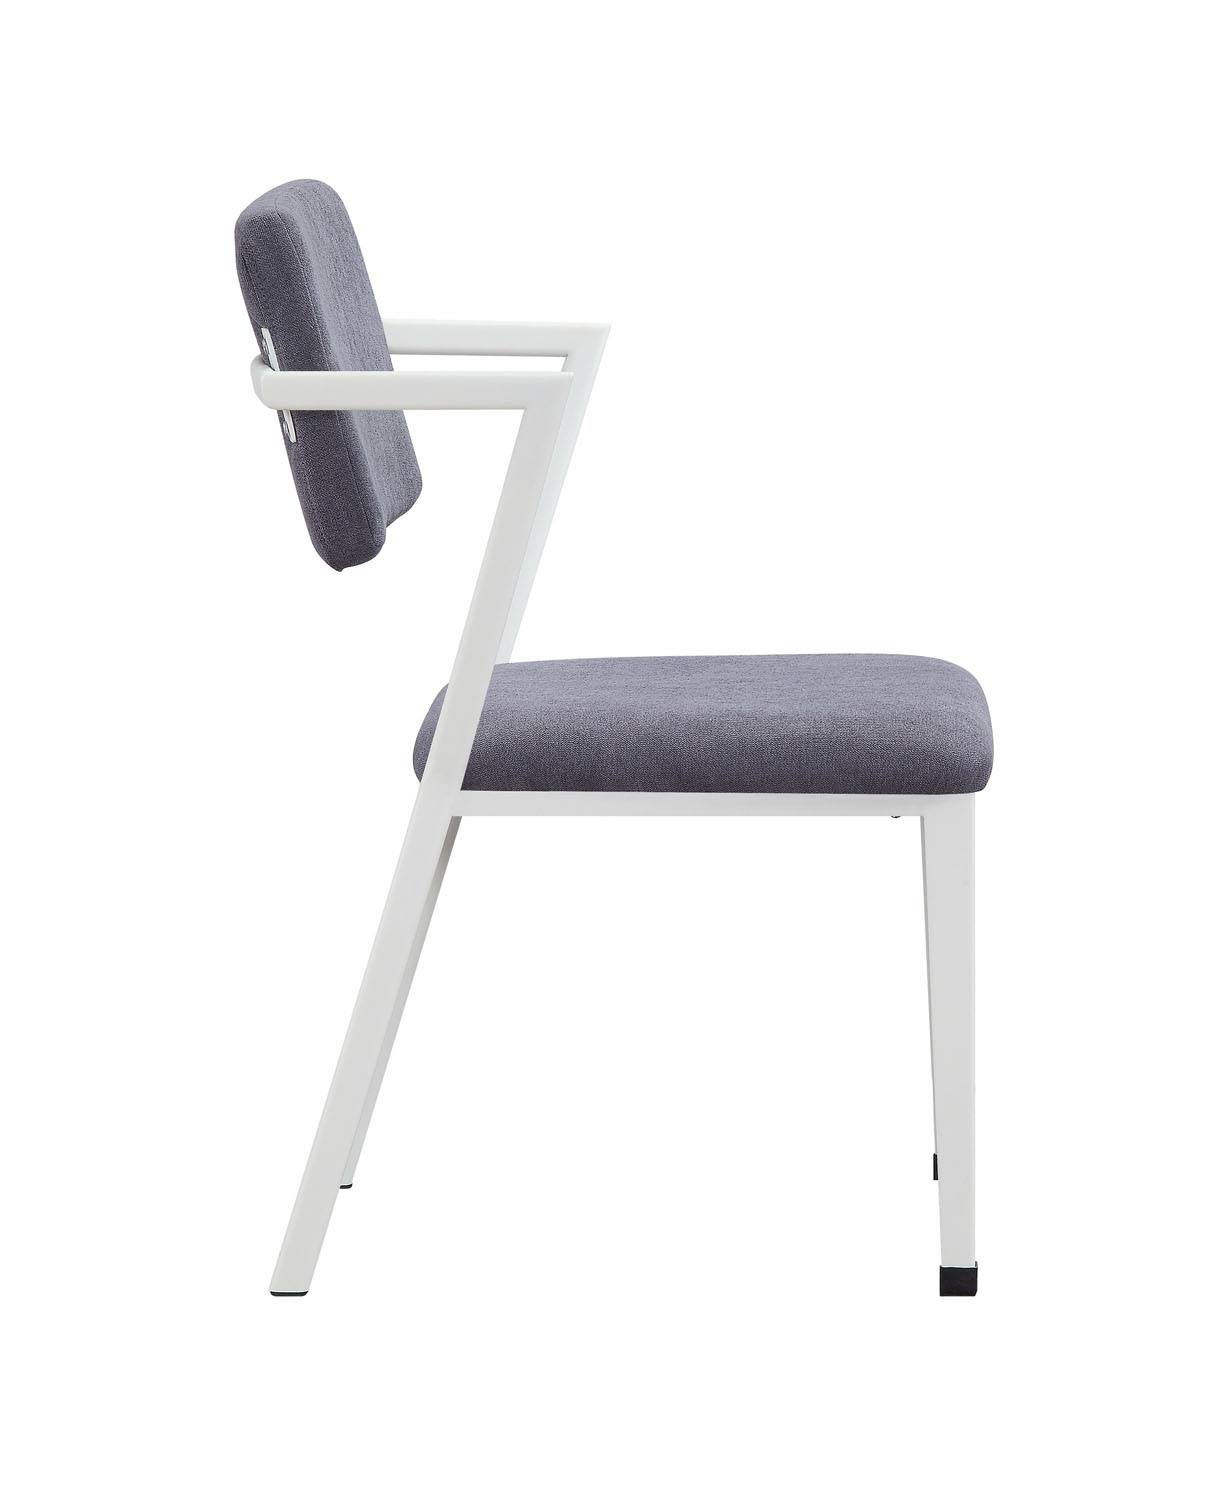 Konto Industrial Arm Chair - Grey/White